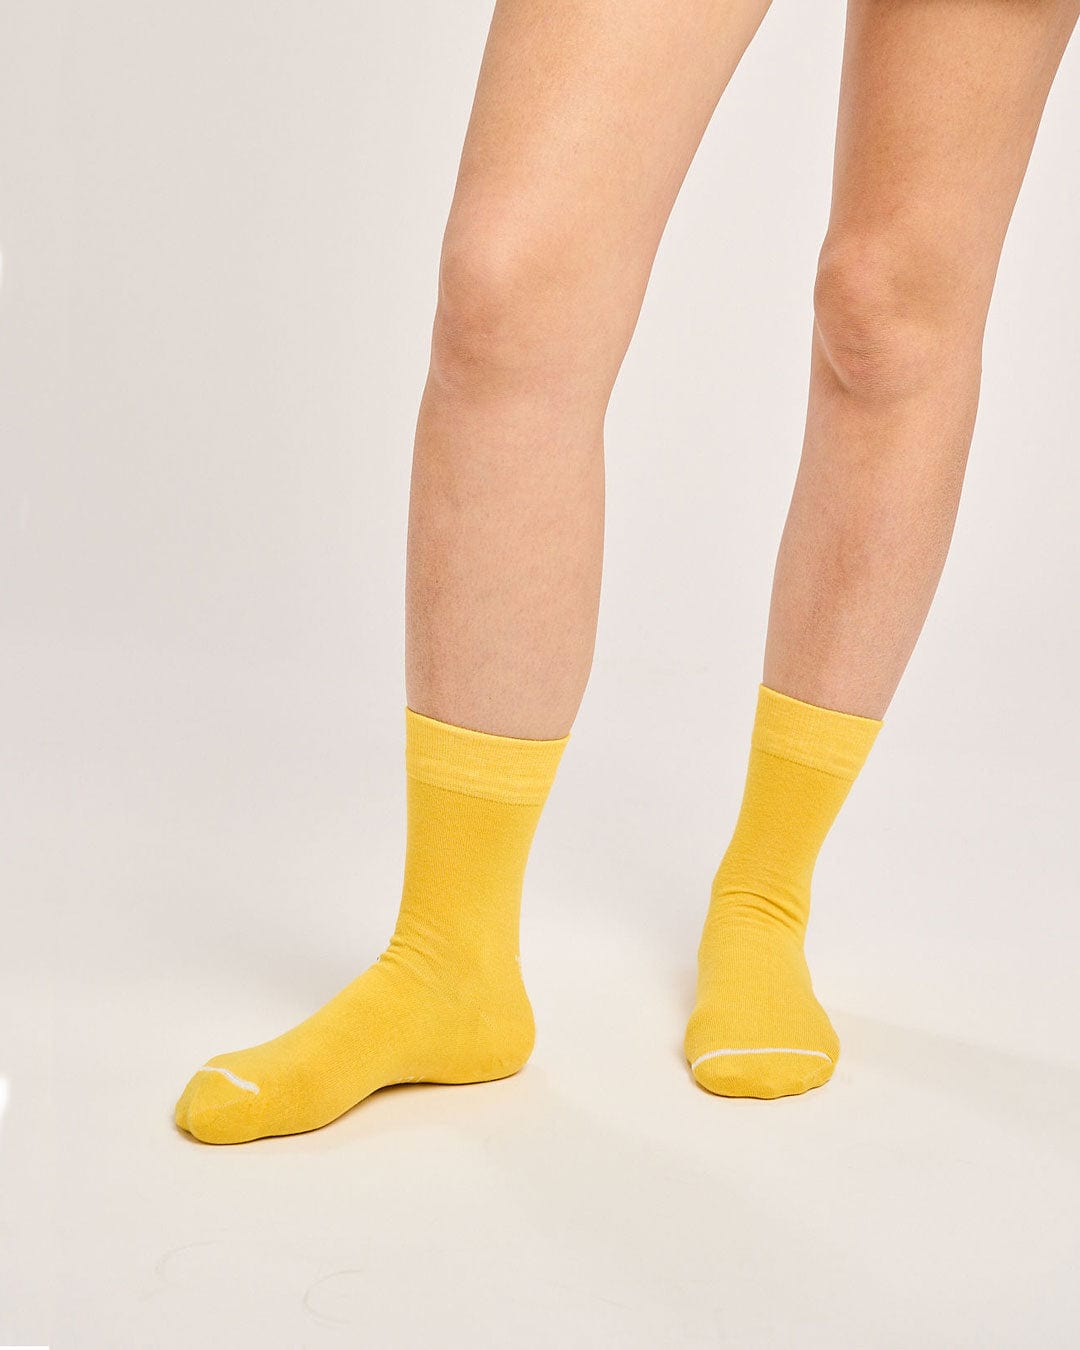 Ecofriendly yellow socks for women. Sustainable seamless toe socks